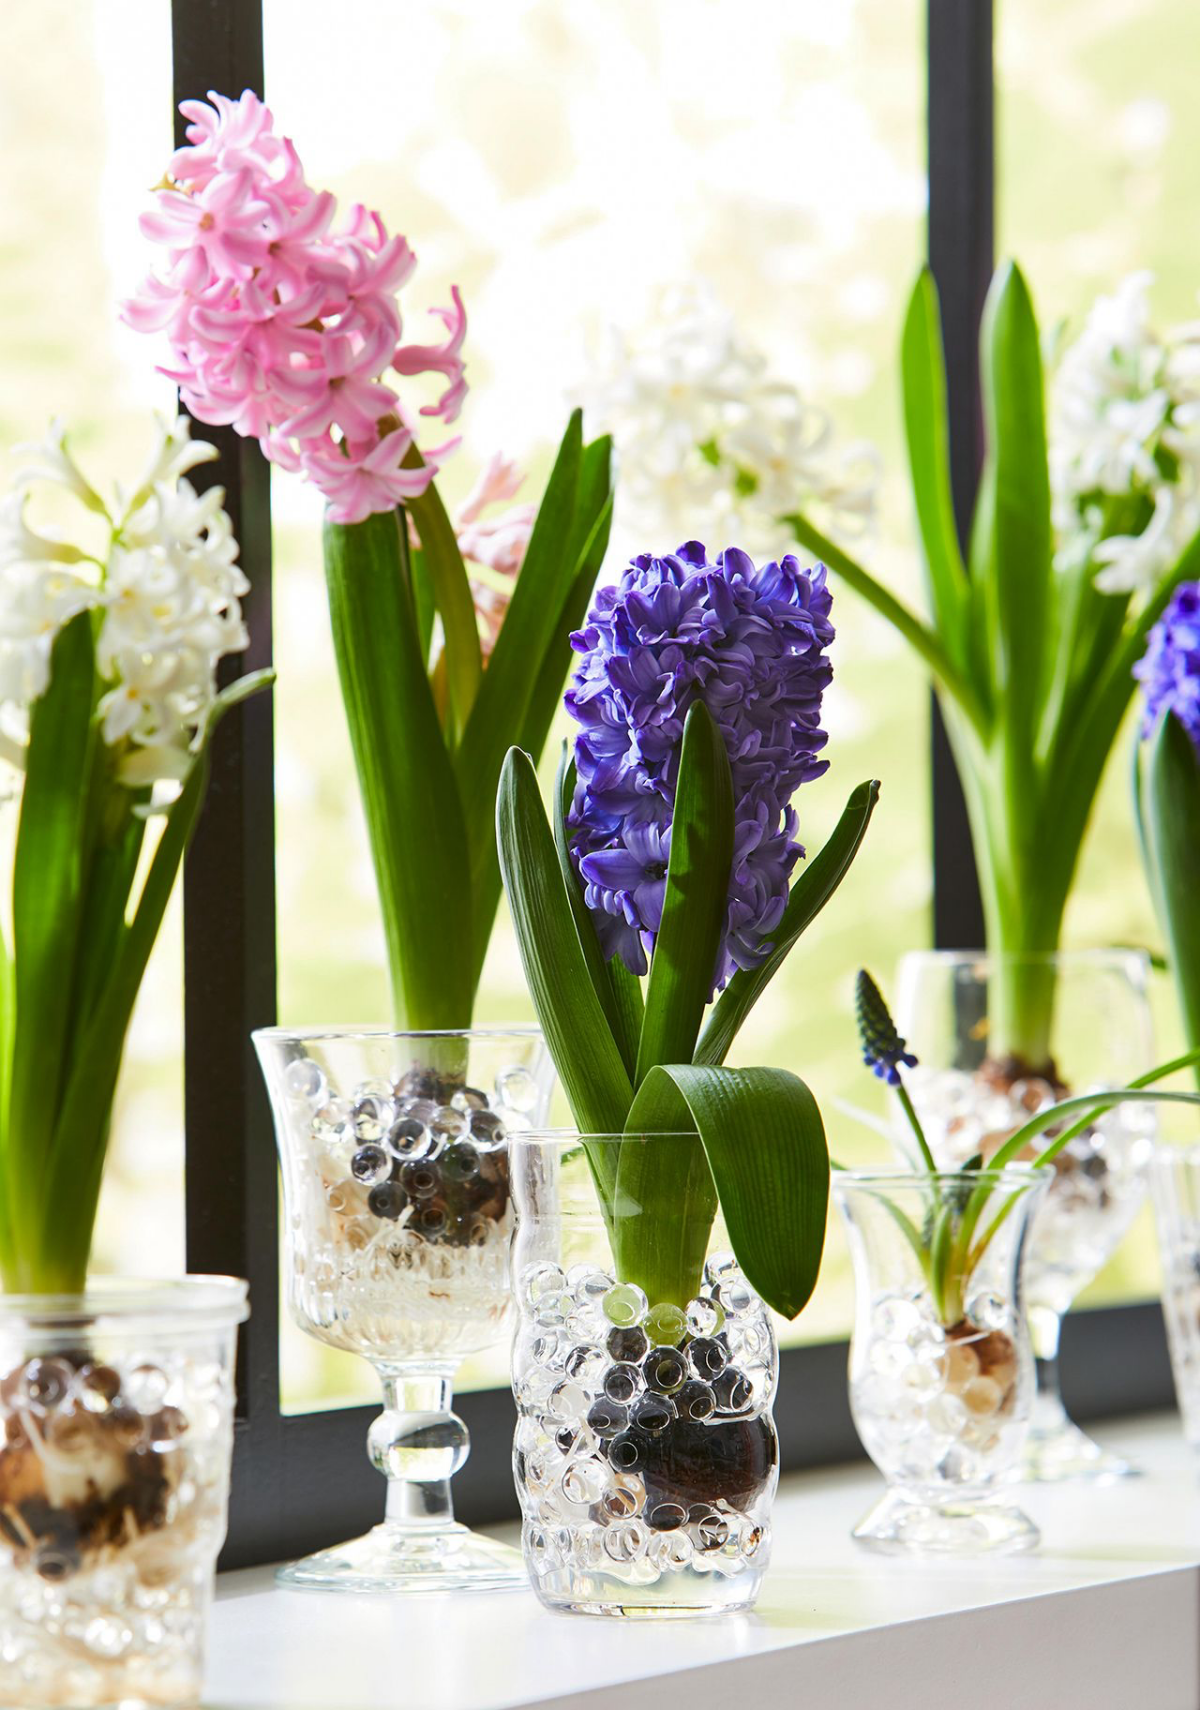 hyacinth bulbs growing plants